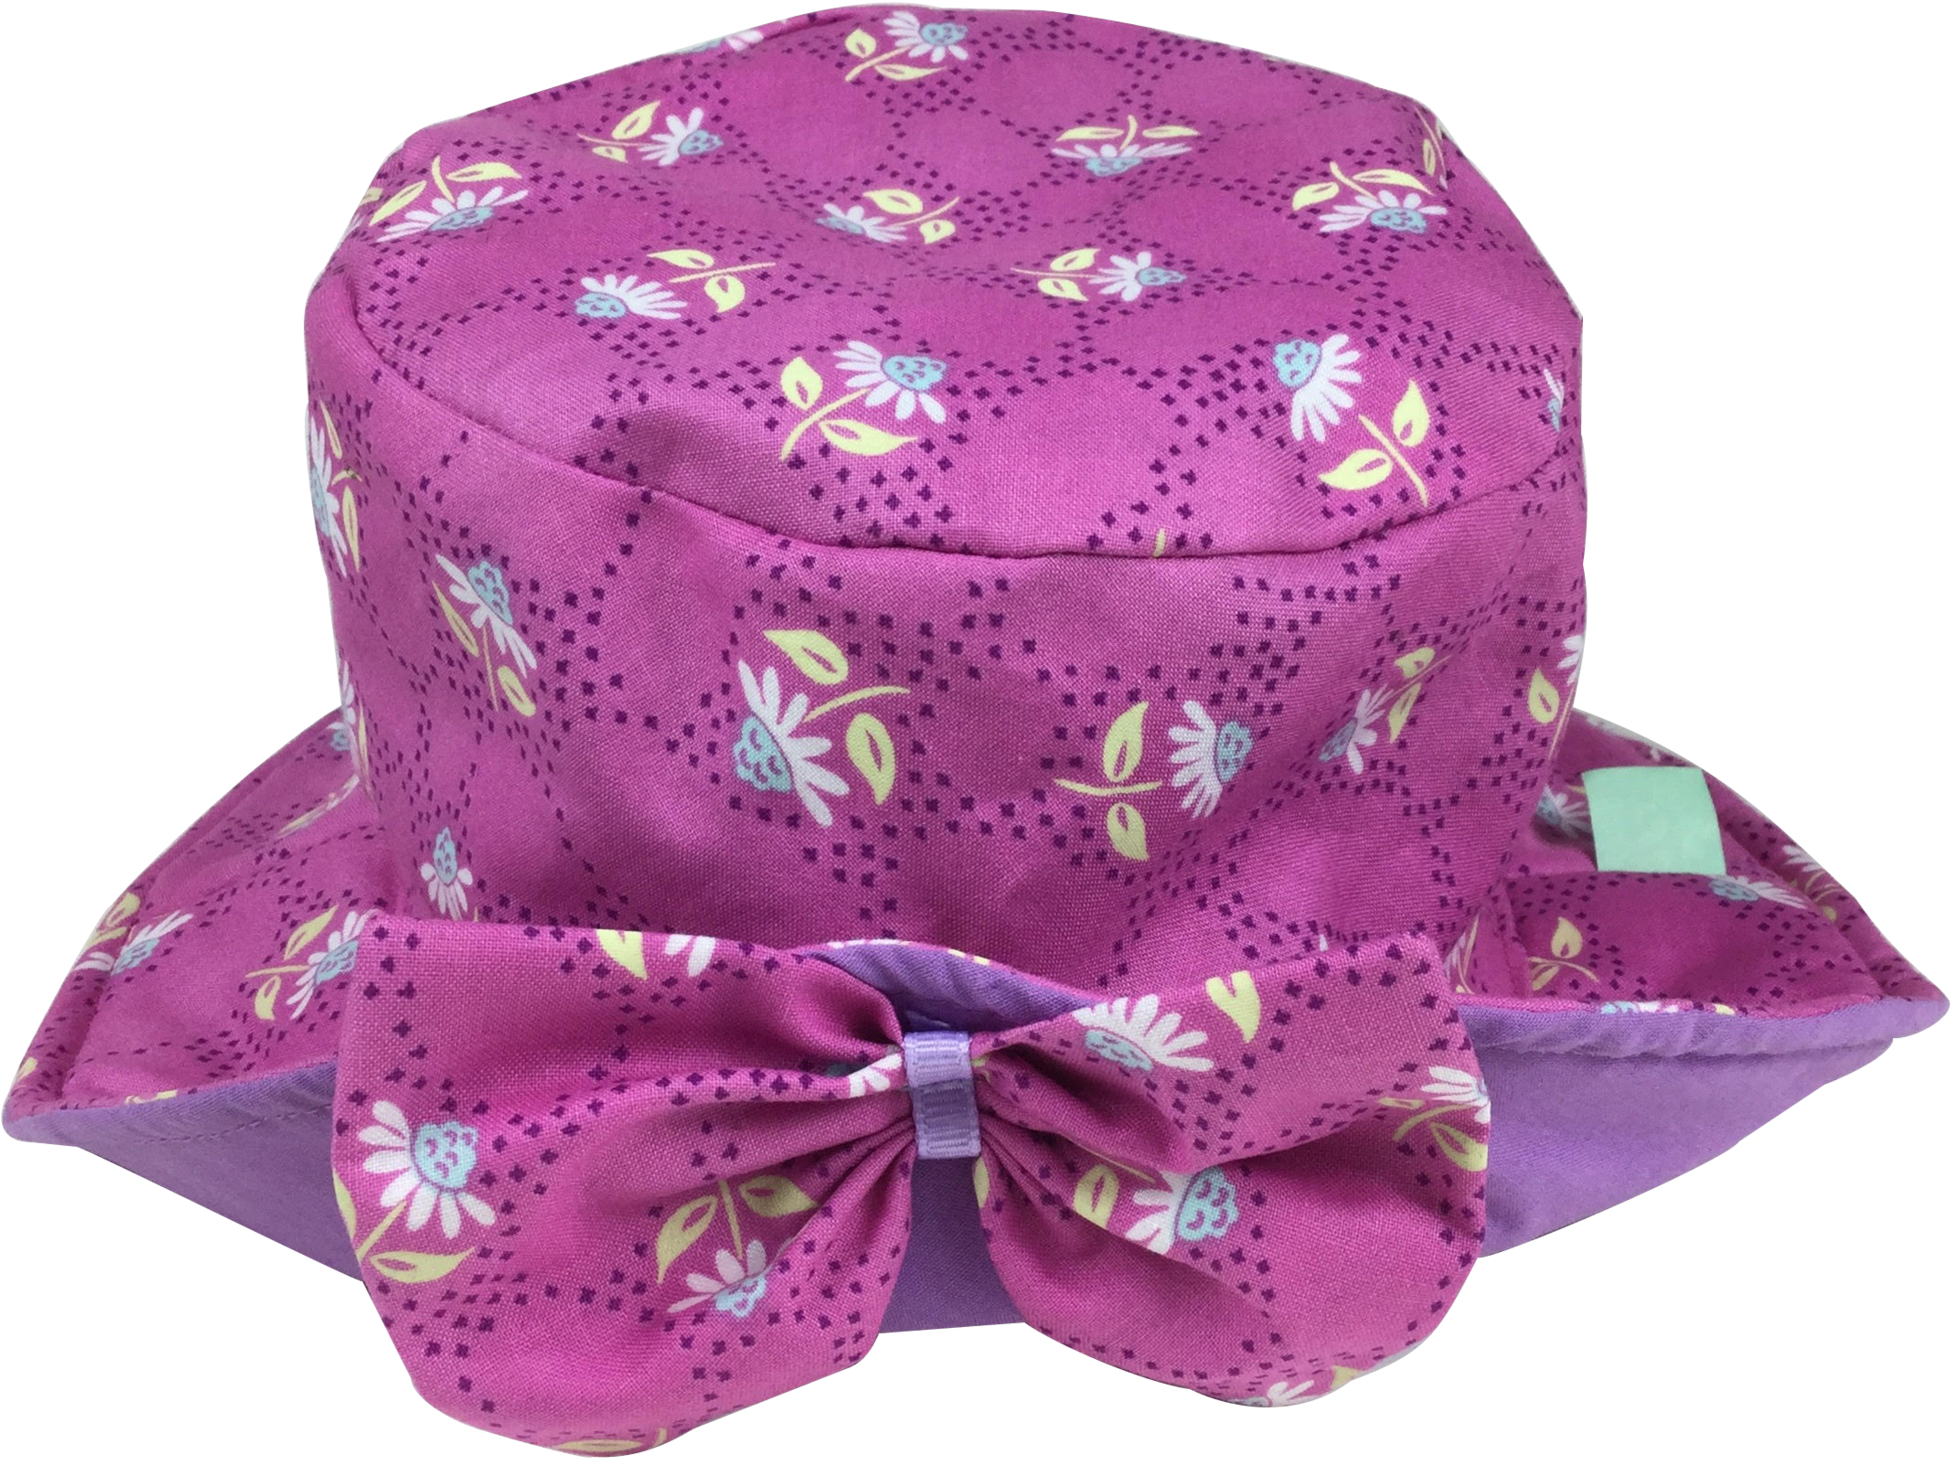 Floral Patterned Pink Sun Hat PNG